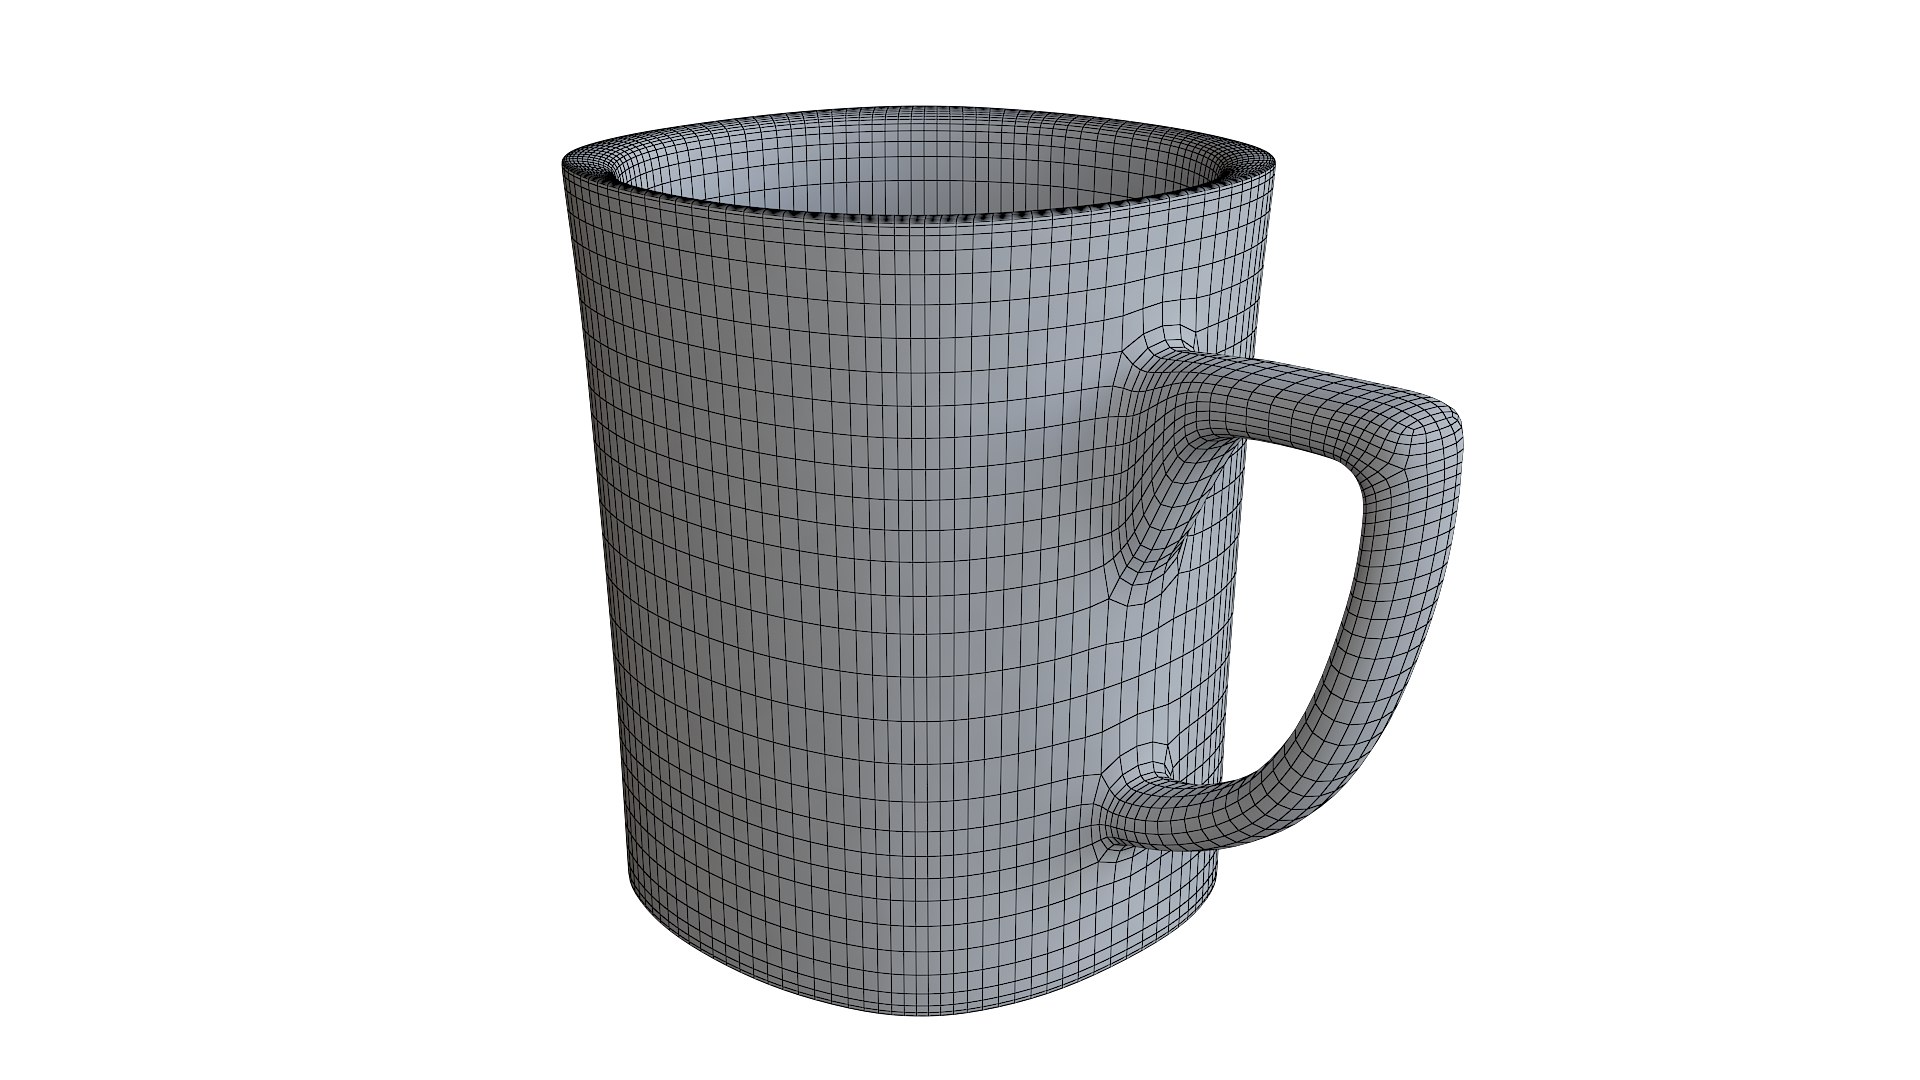 Nespresso glass cup coffee 3D model - TurboSquid 1439227